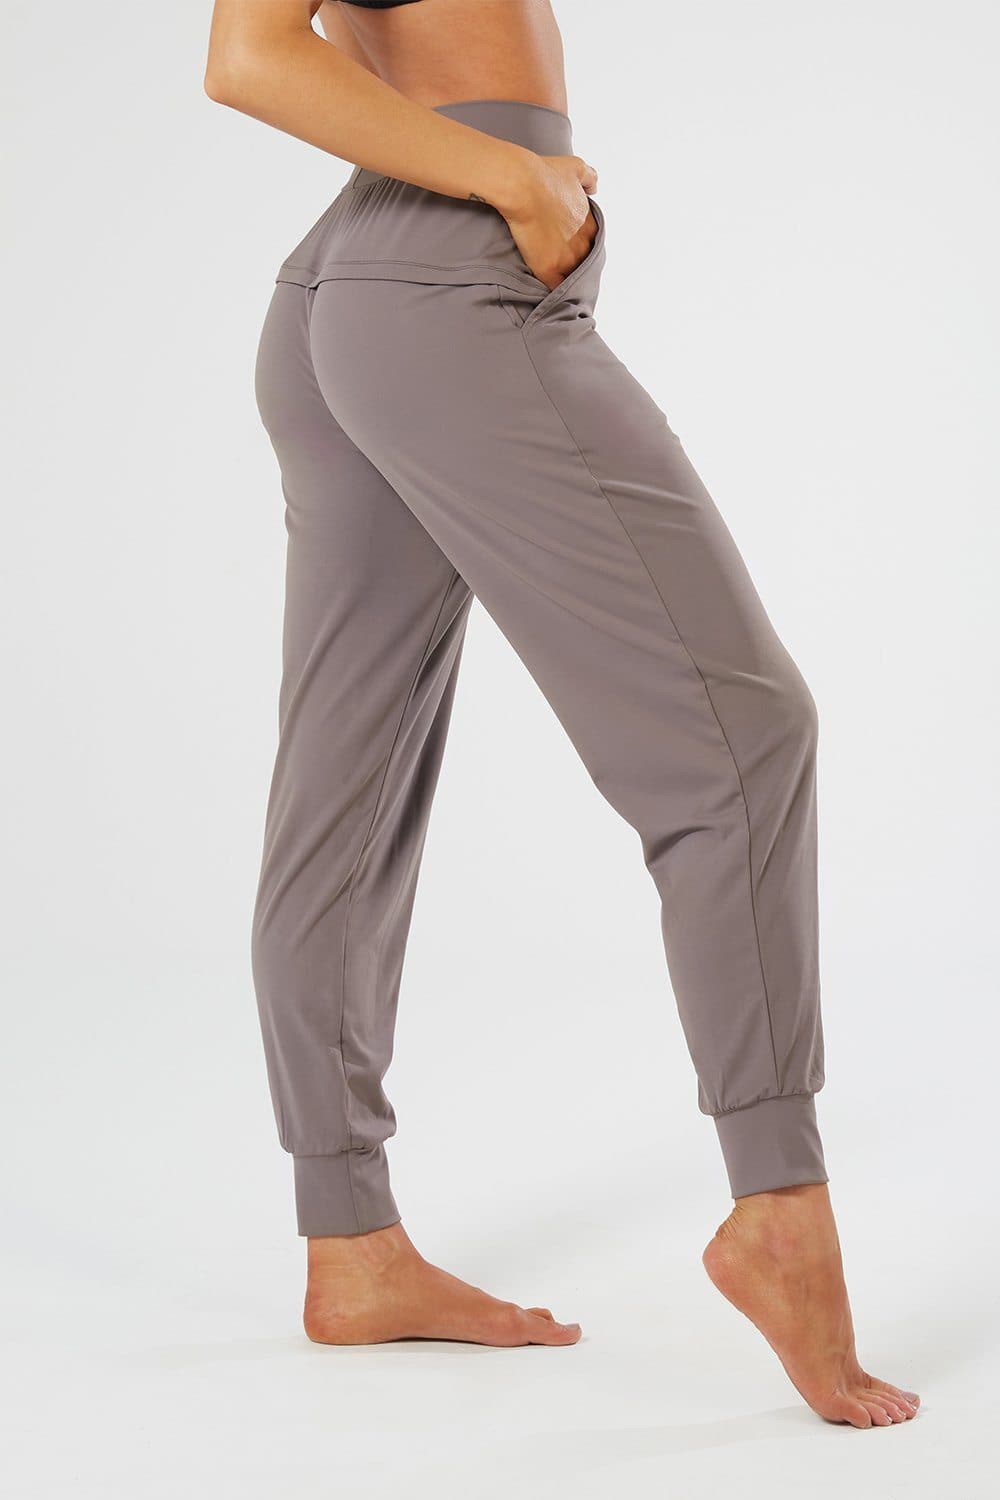 Apana Ladies Sojourn Jogger Active Yoga Sweatpants Clothing (Deep Sage,  Medium) : : Clothing, Shoes & Accessories